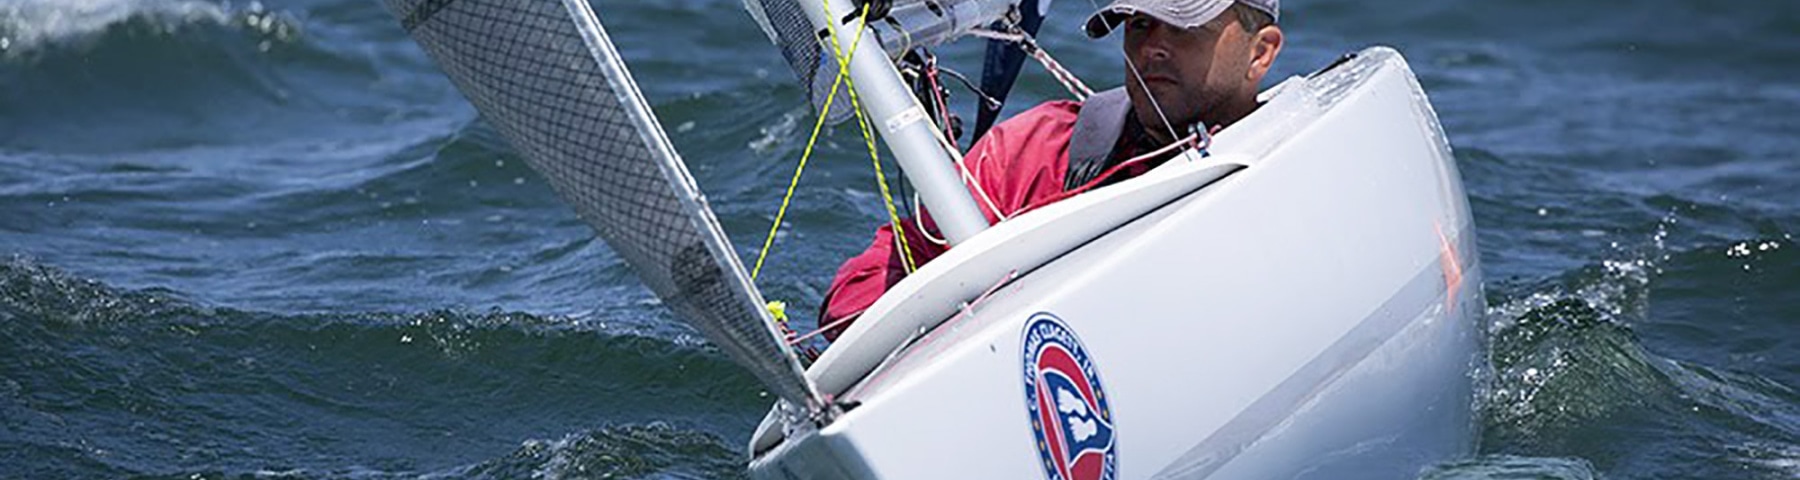 A 2.4mR sailor competes at The Clagett Regatta